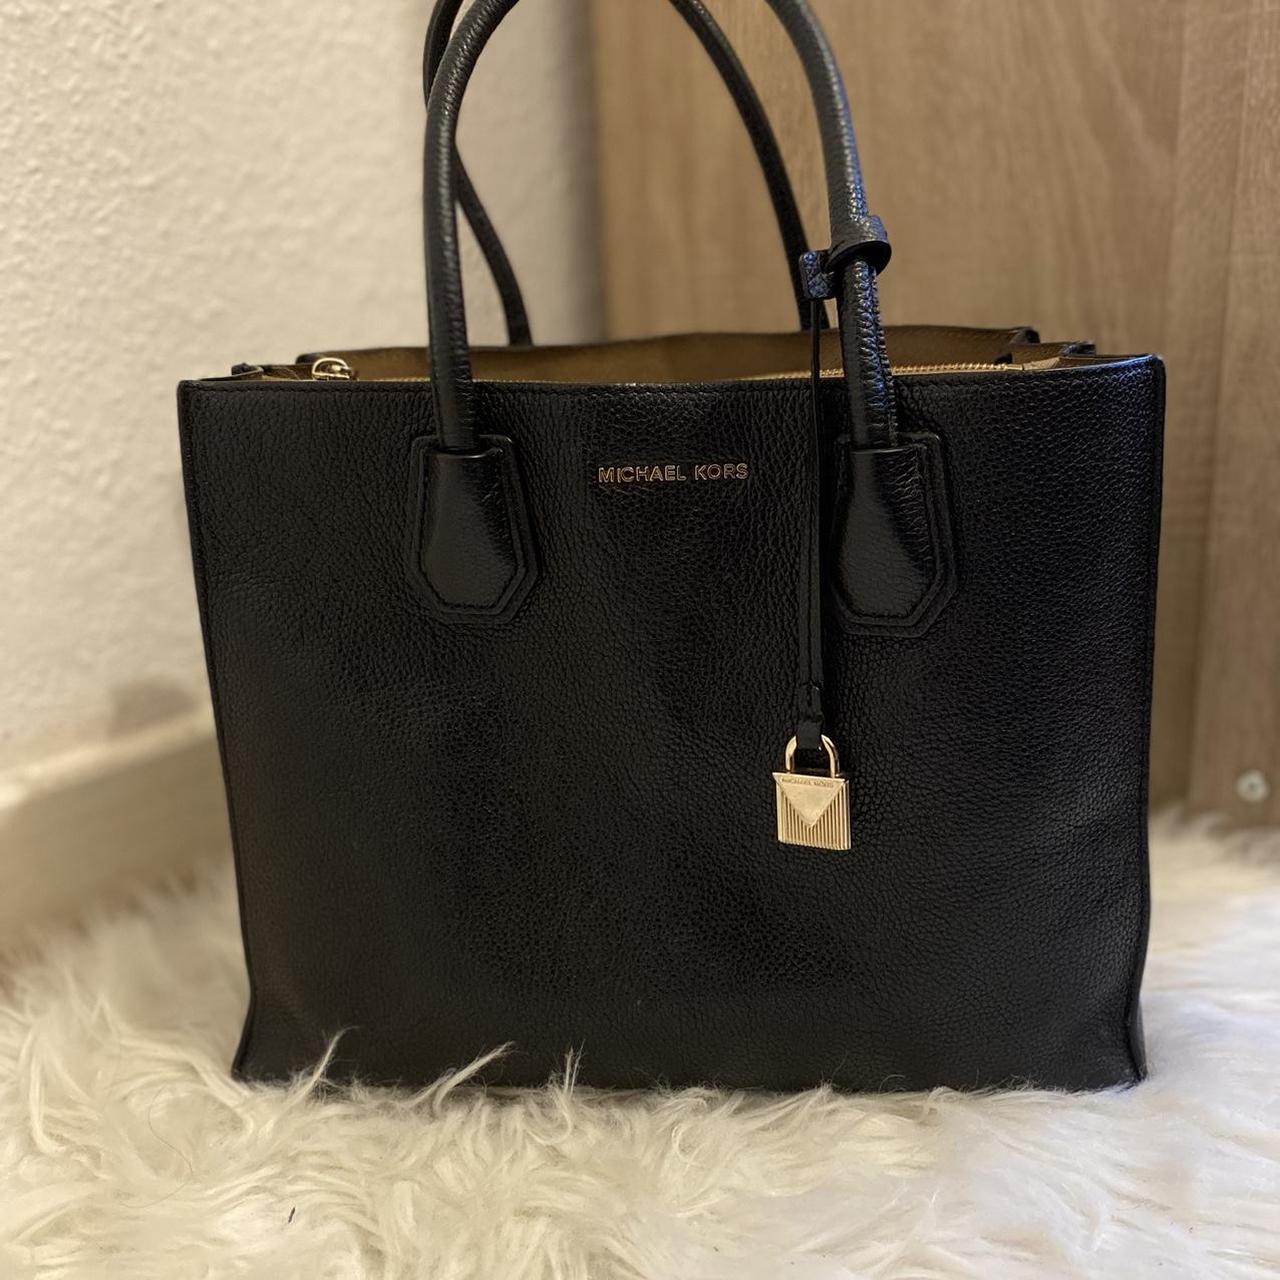 Michael Kors Women’s Handbag - Depop